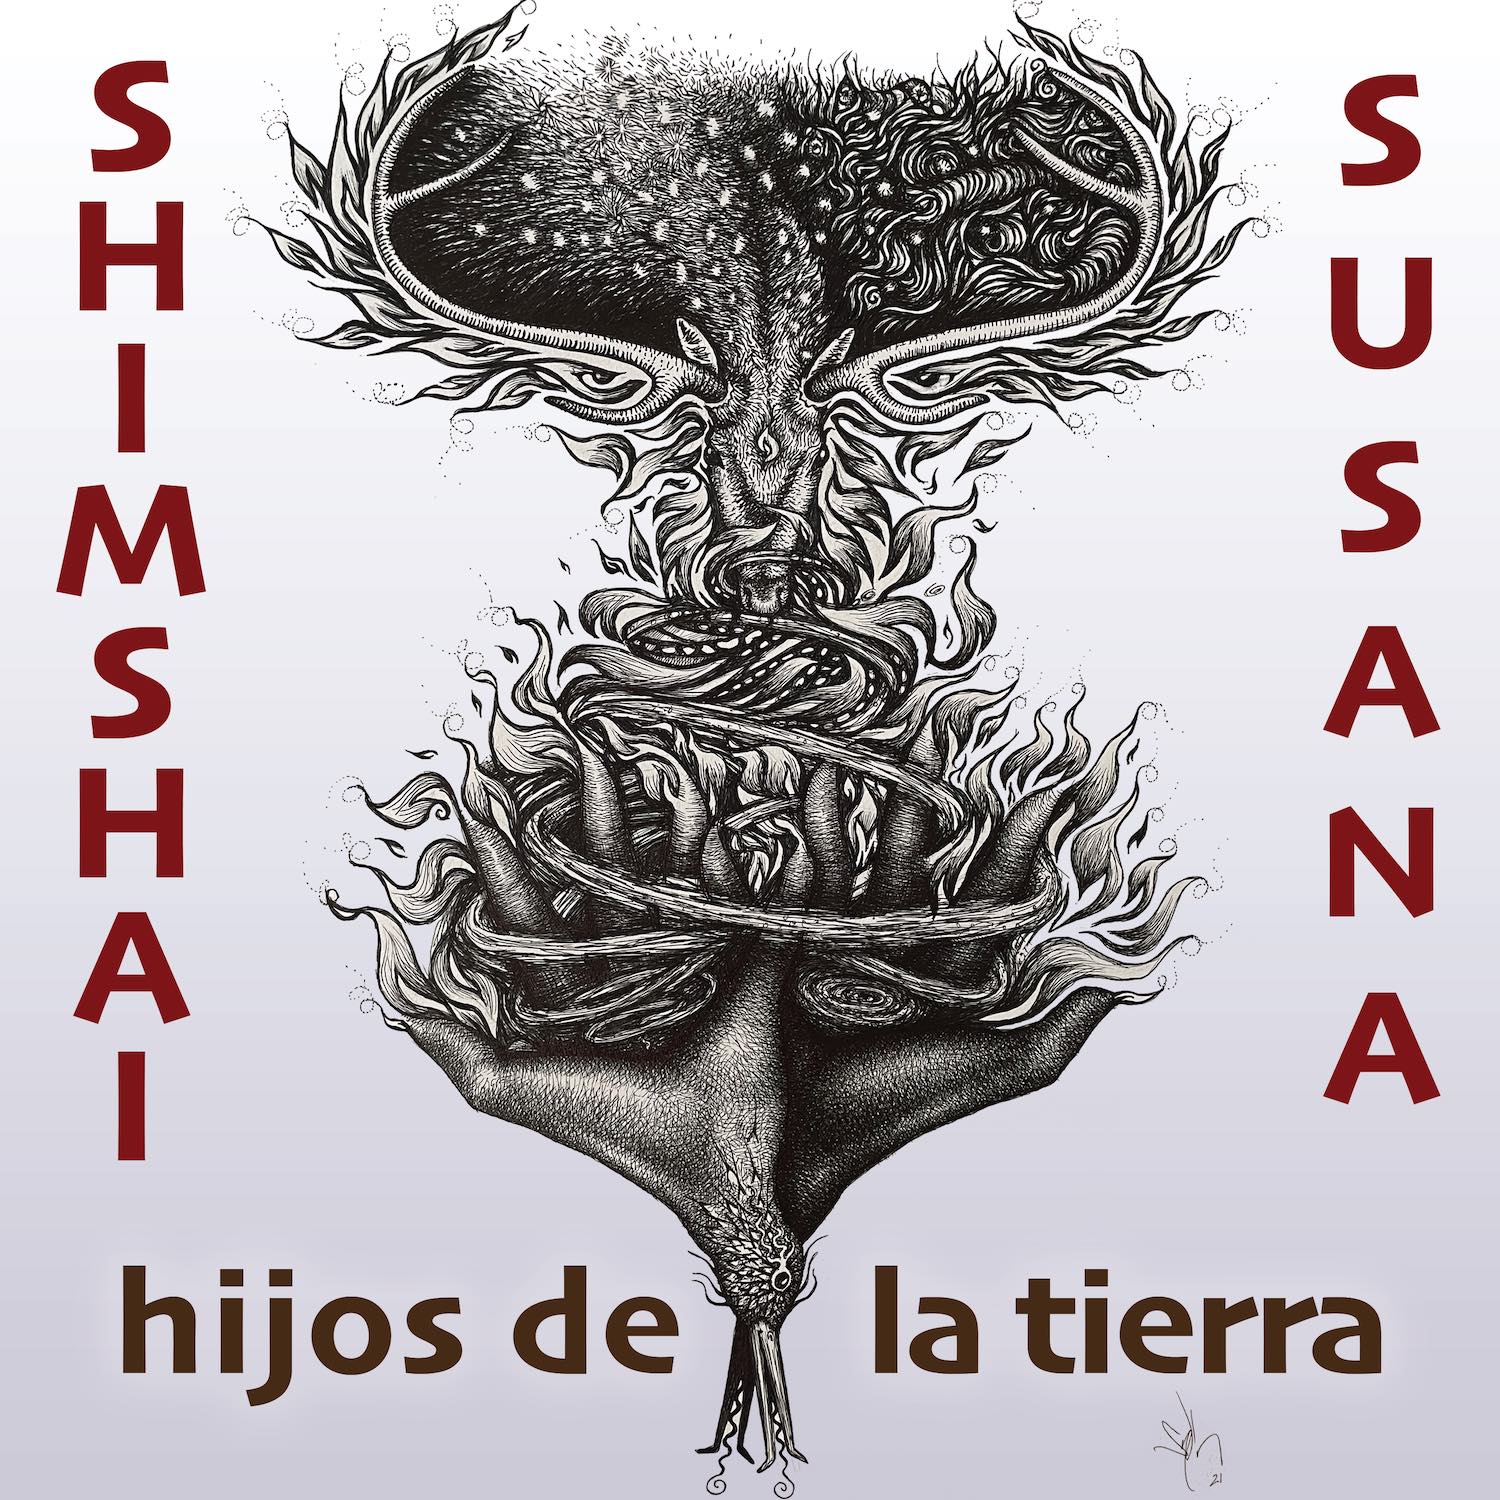 Hijos de la Tierra traditional medicine music folk song arranged by Shimshai from Shimshai & Susana